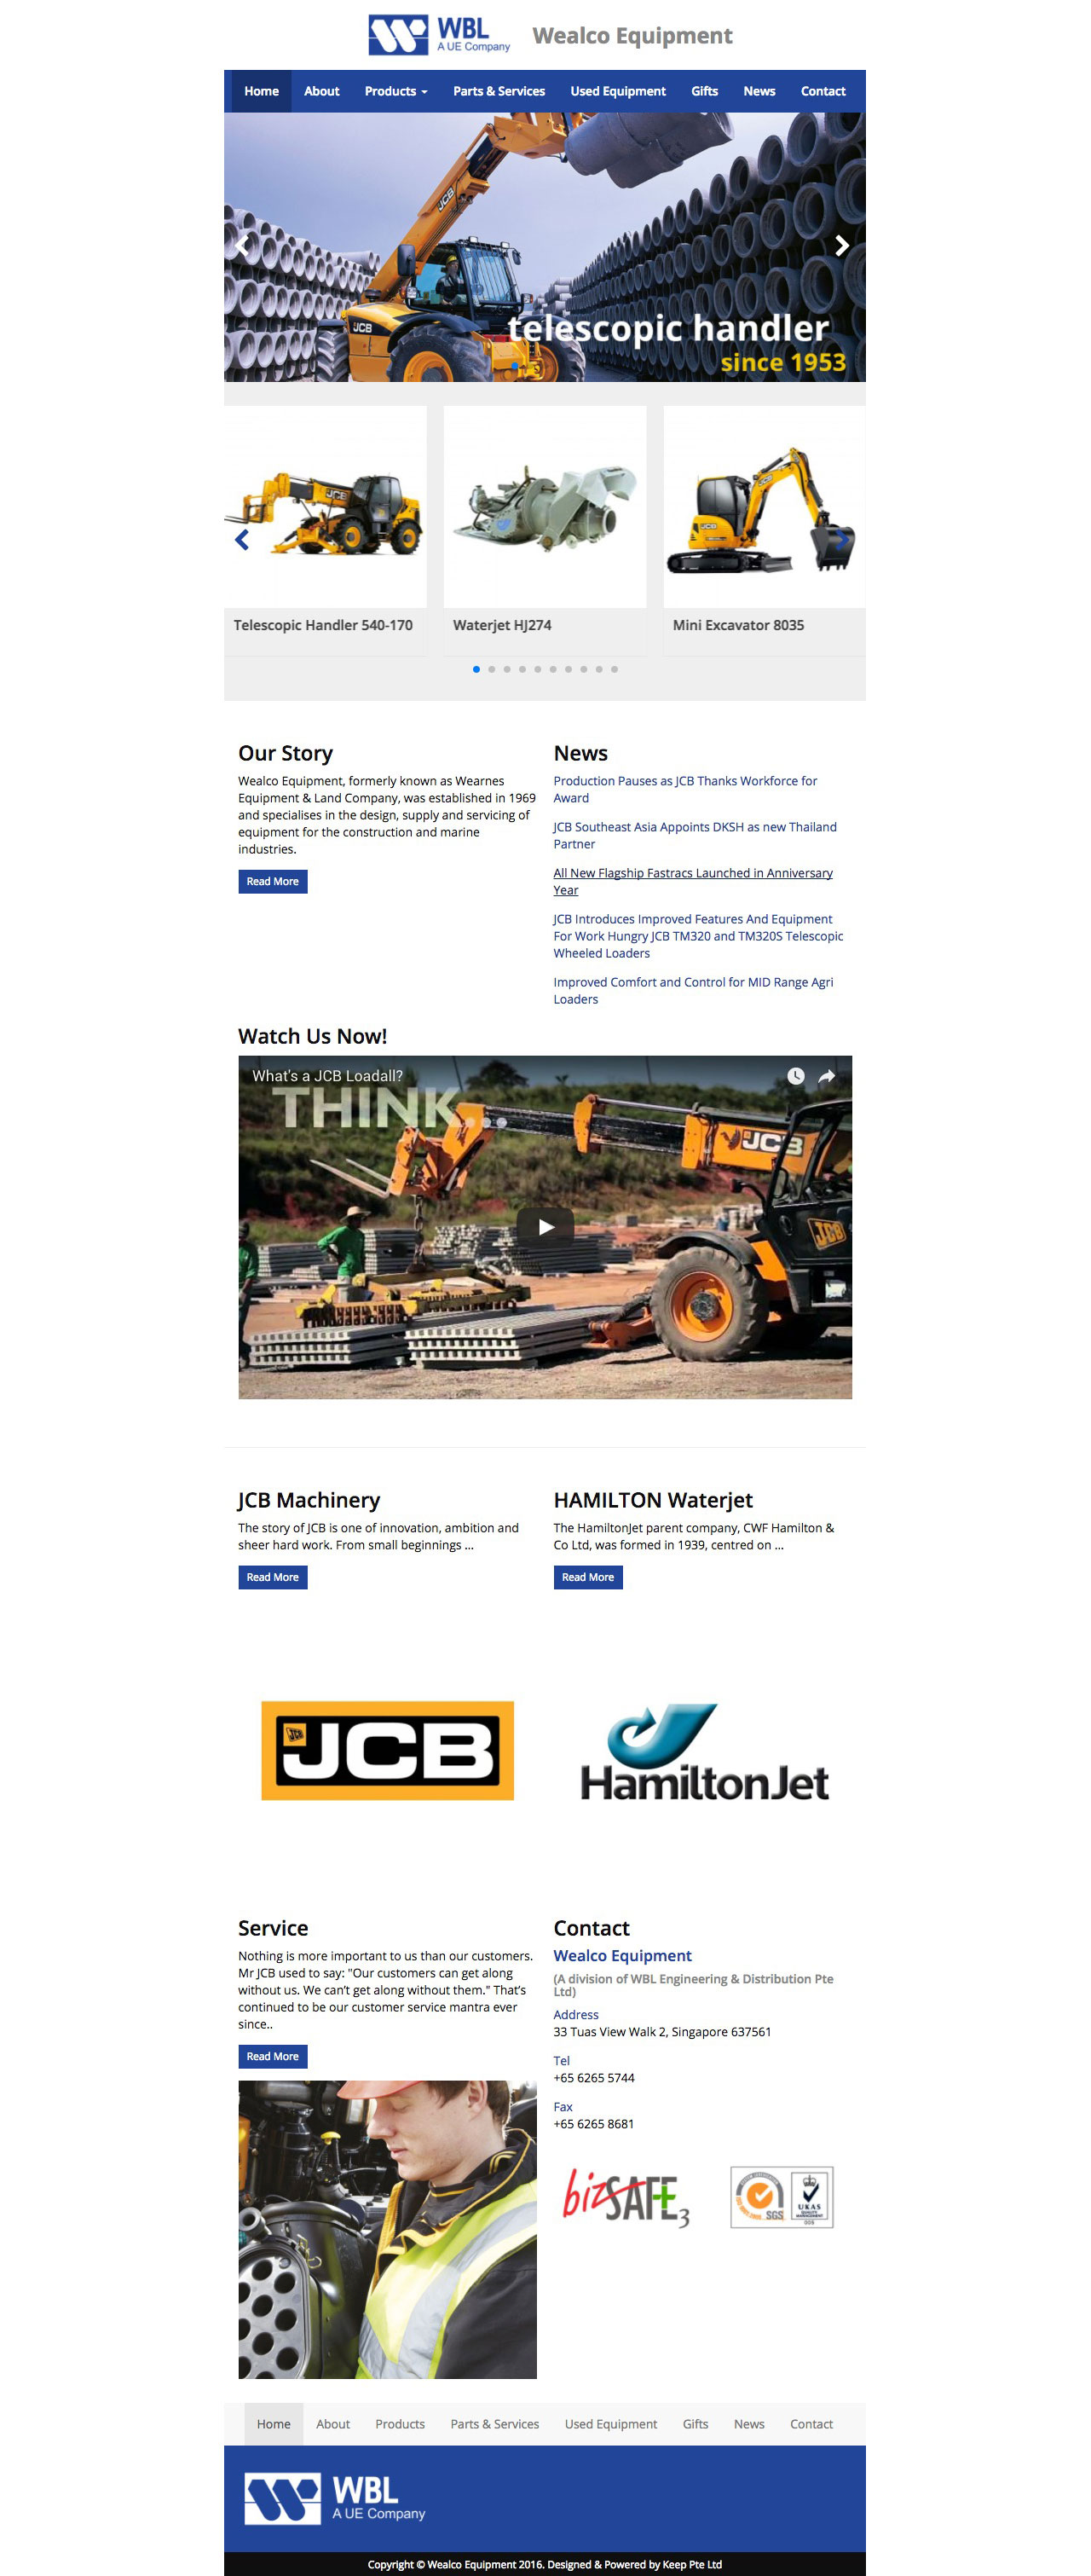 Wealco Equipment website homepage on tablet